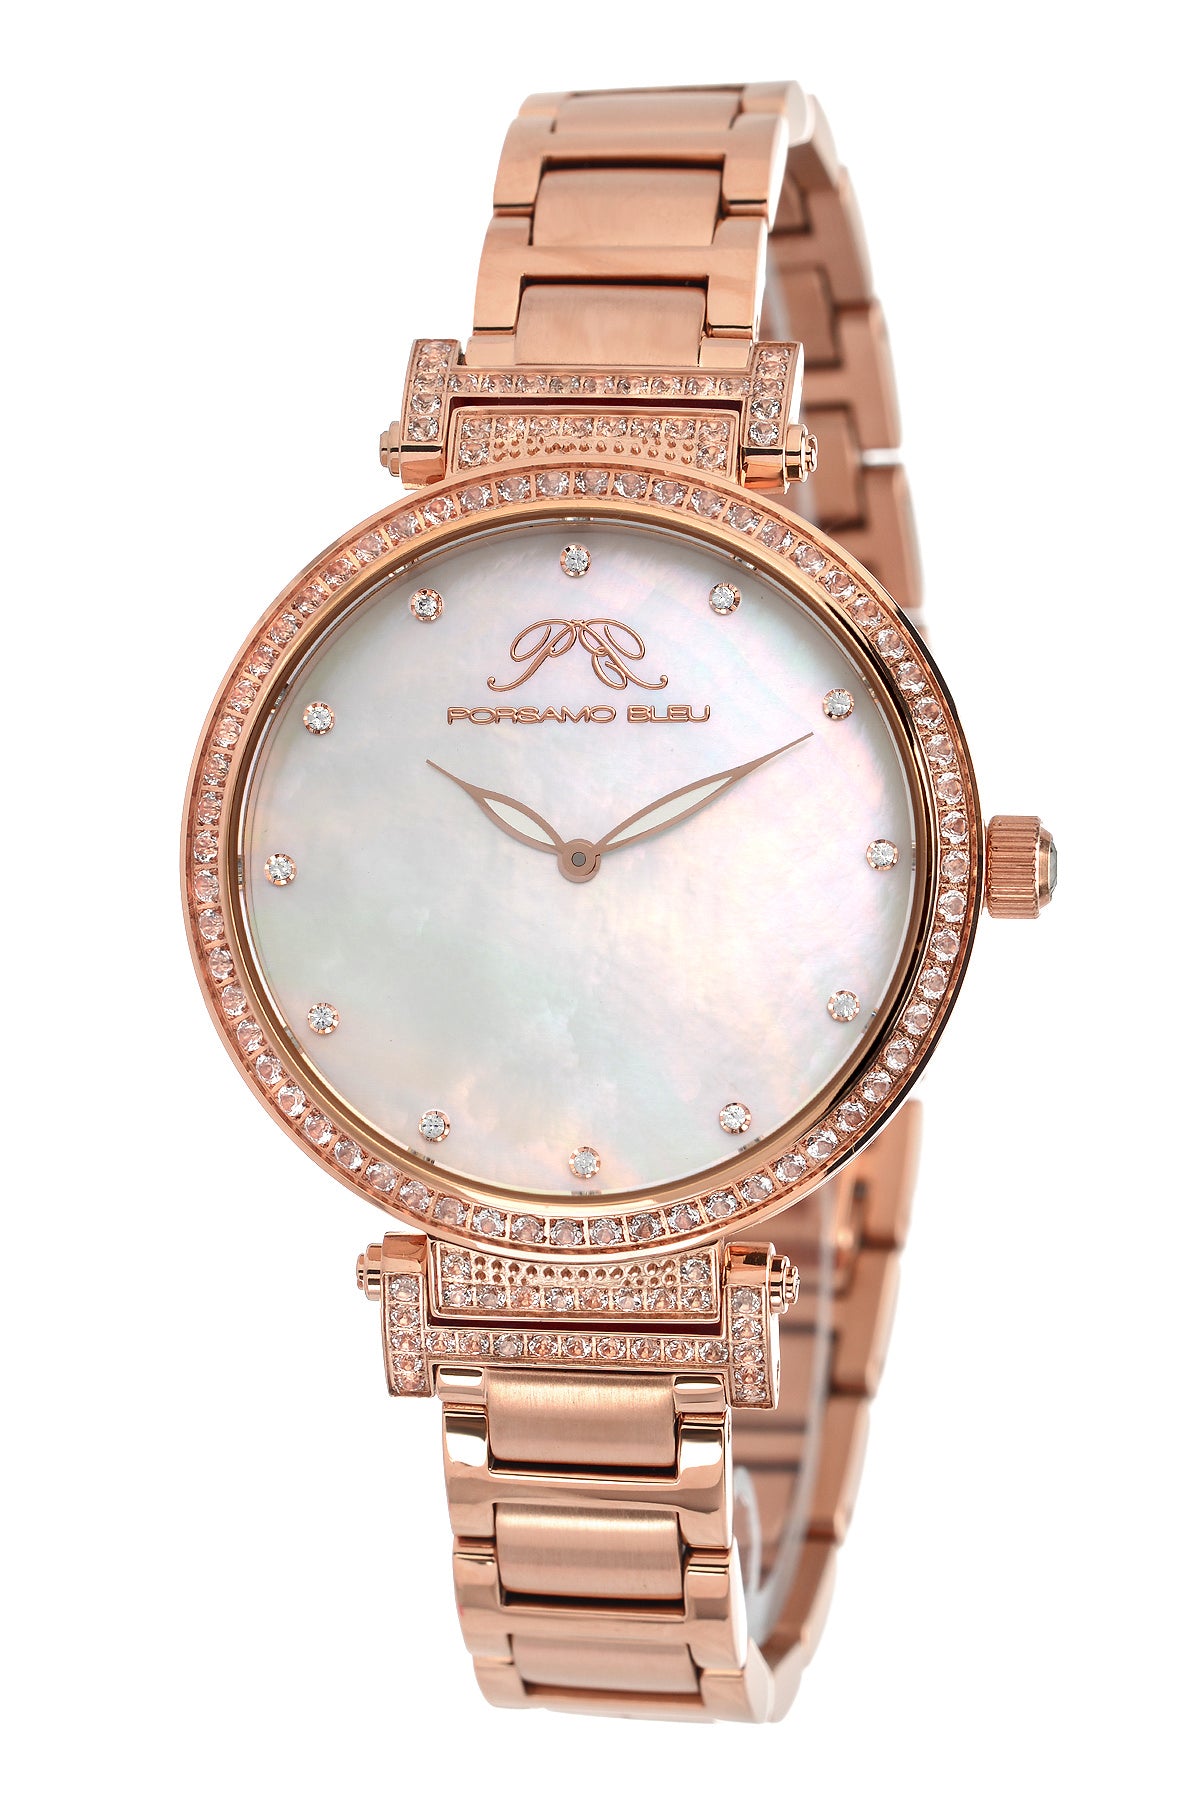 Porsamo Bleu Chantal Luxury Topaz Women's Stainless Steel Watch, Rose, White 671CCHS